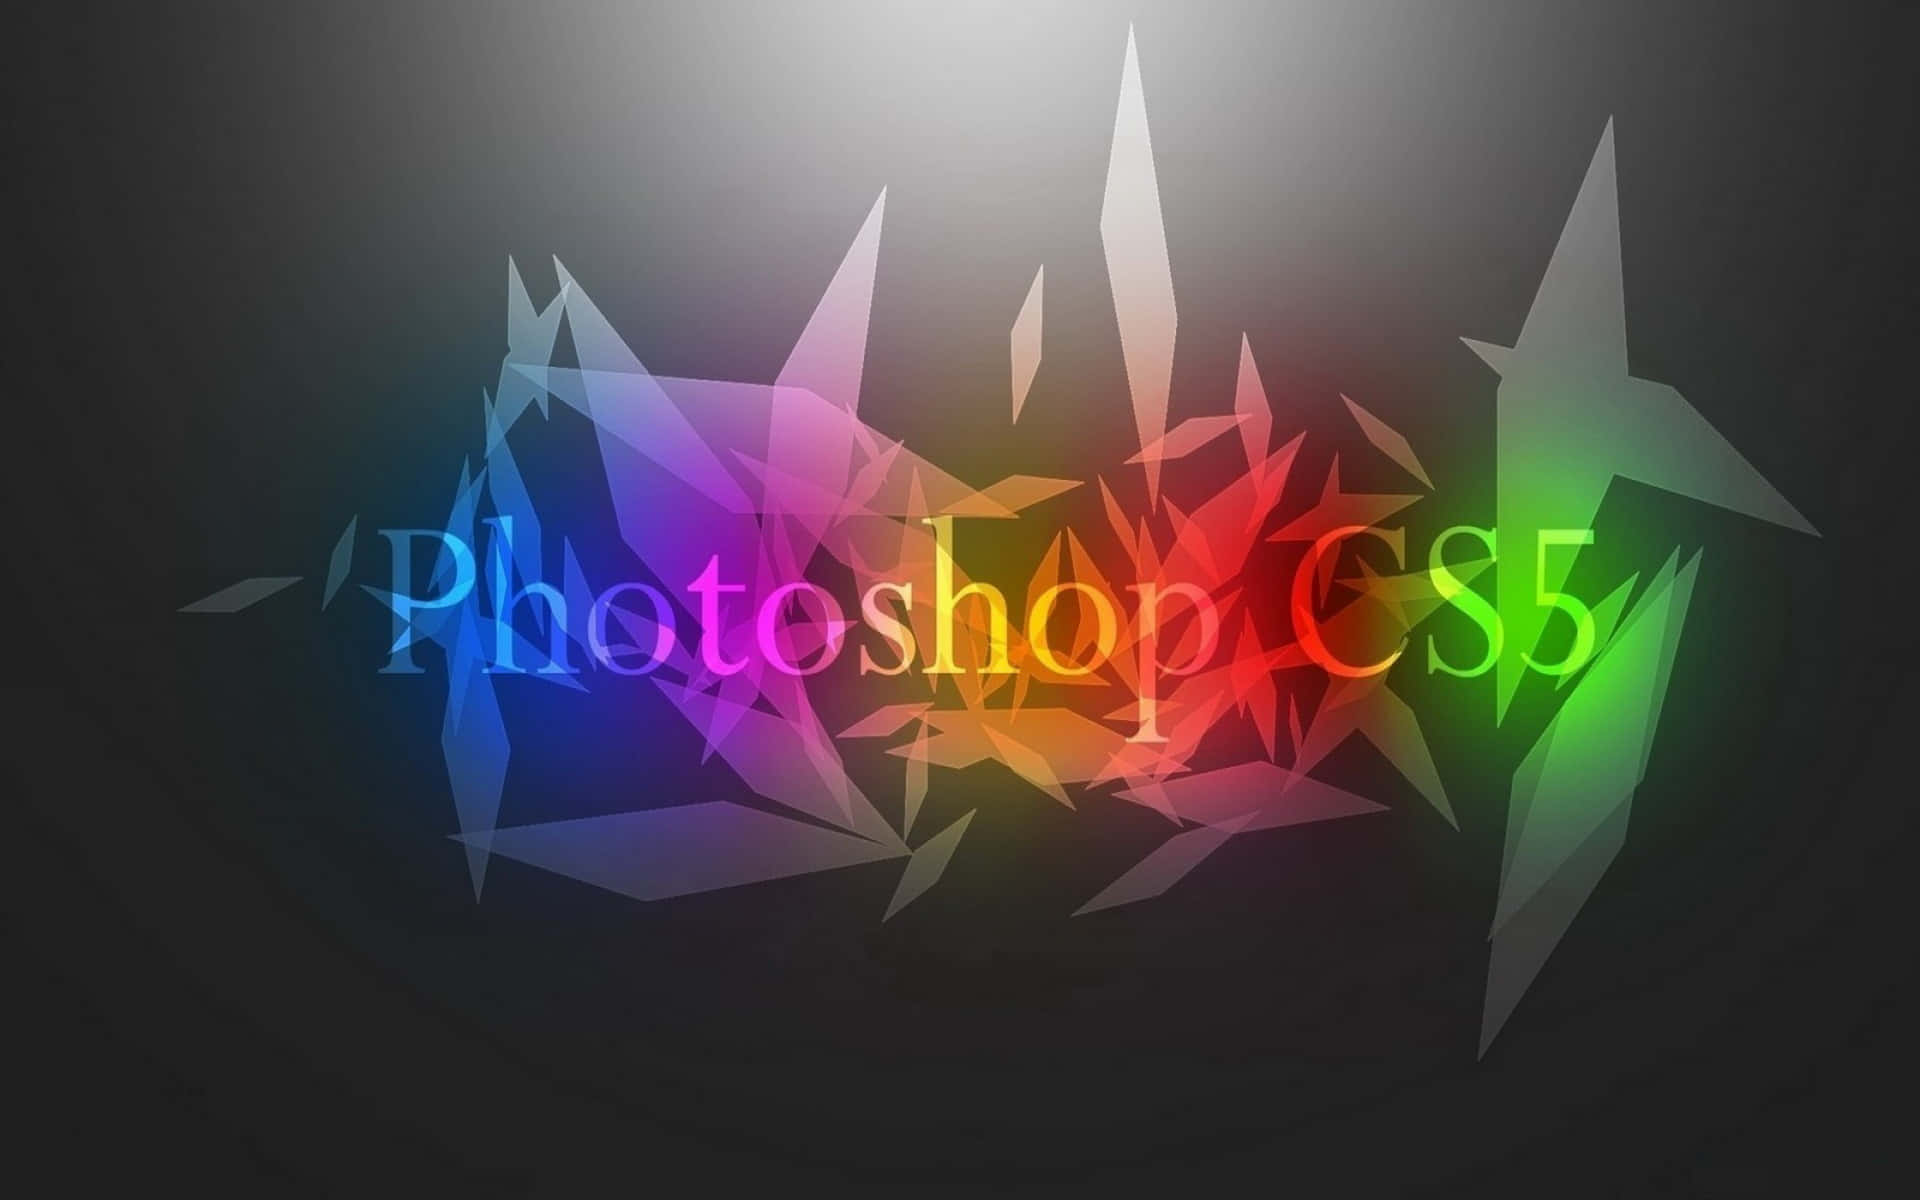 Photoshop Cs5 Multi-colored Logo Wallpaper